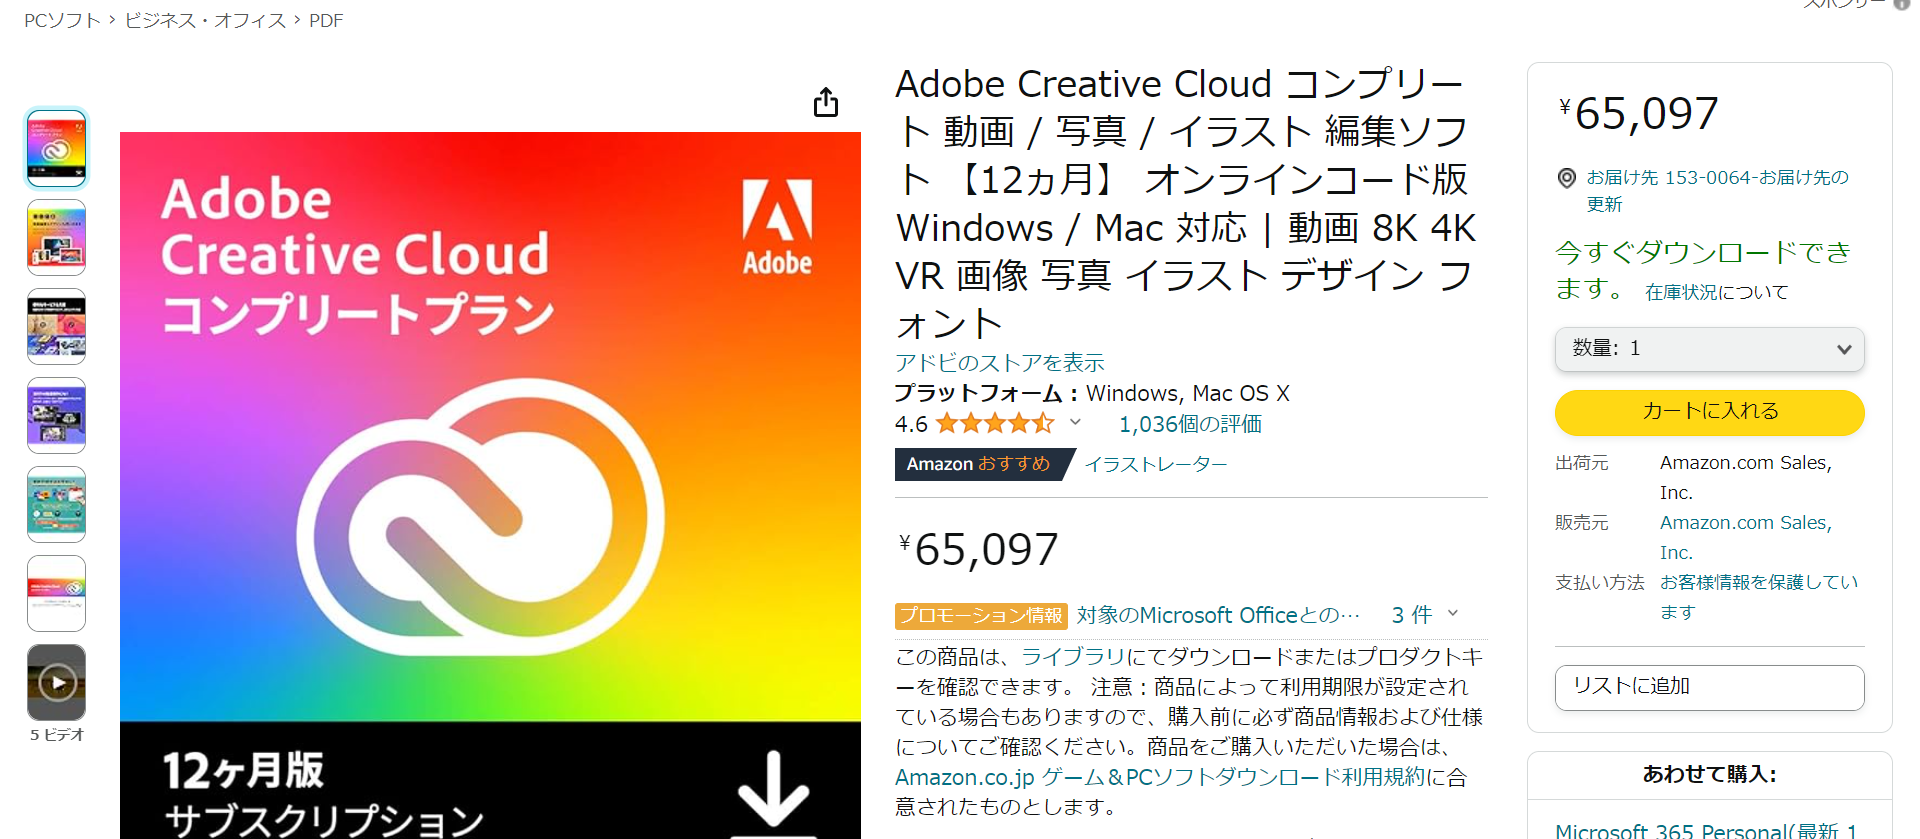 Adobe Dreamweaver(Ahr h[EB[o[)